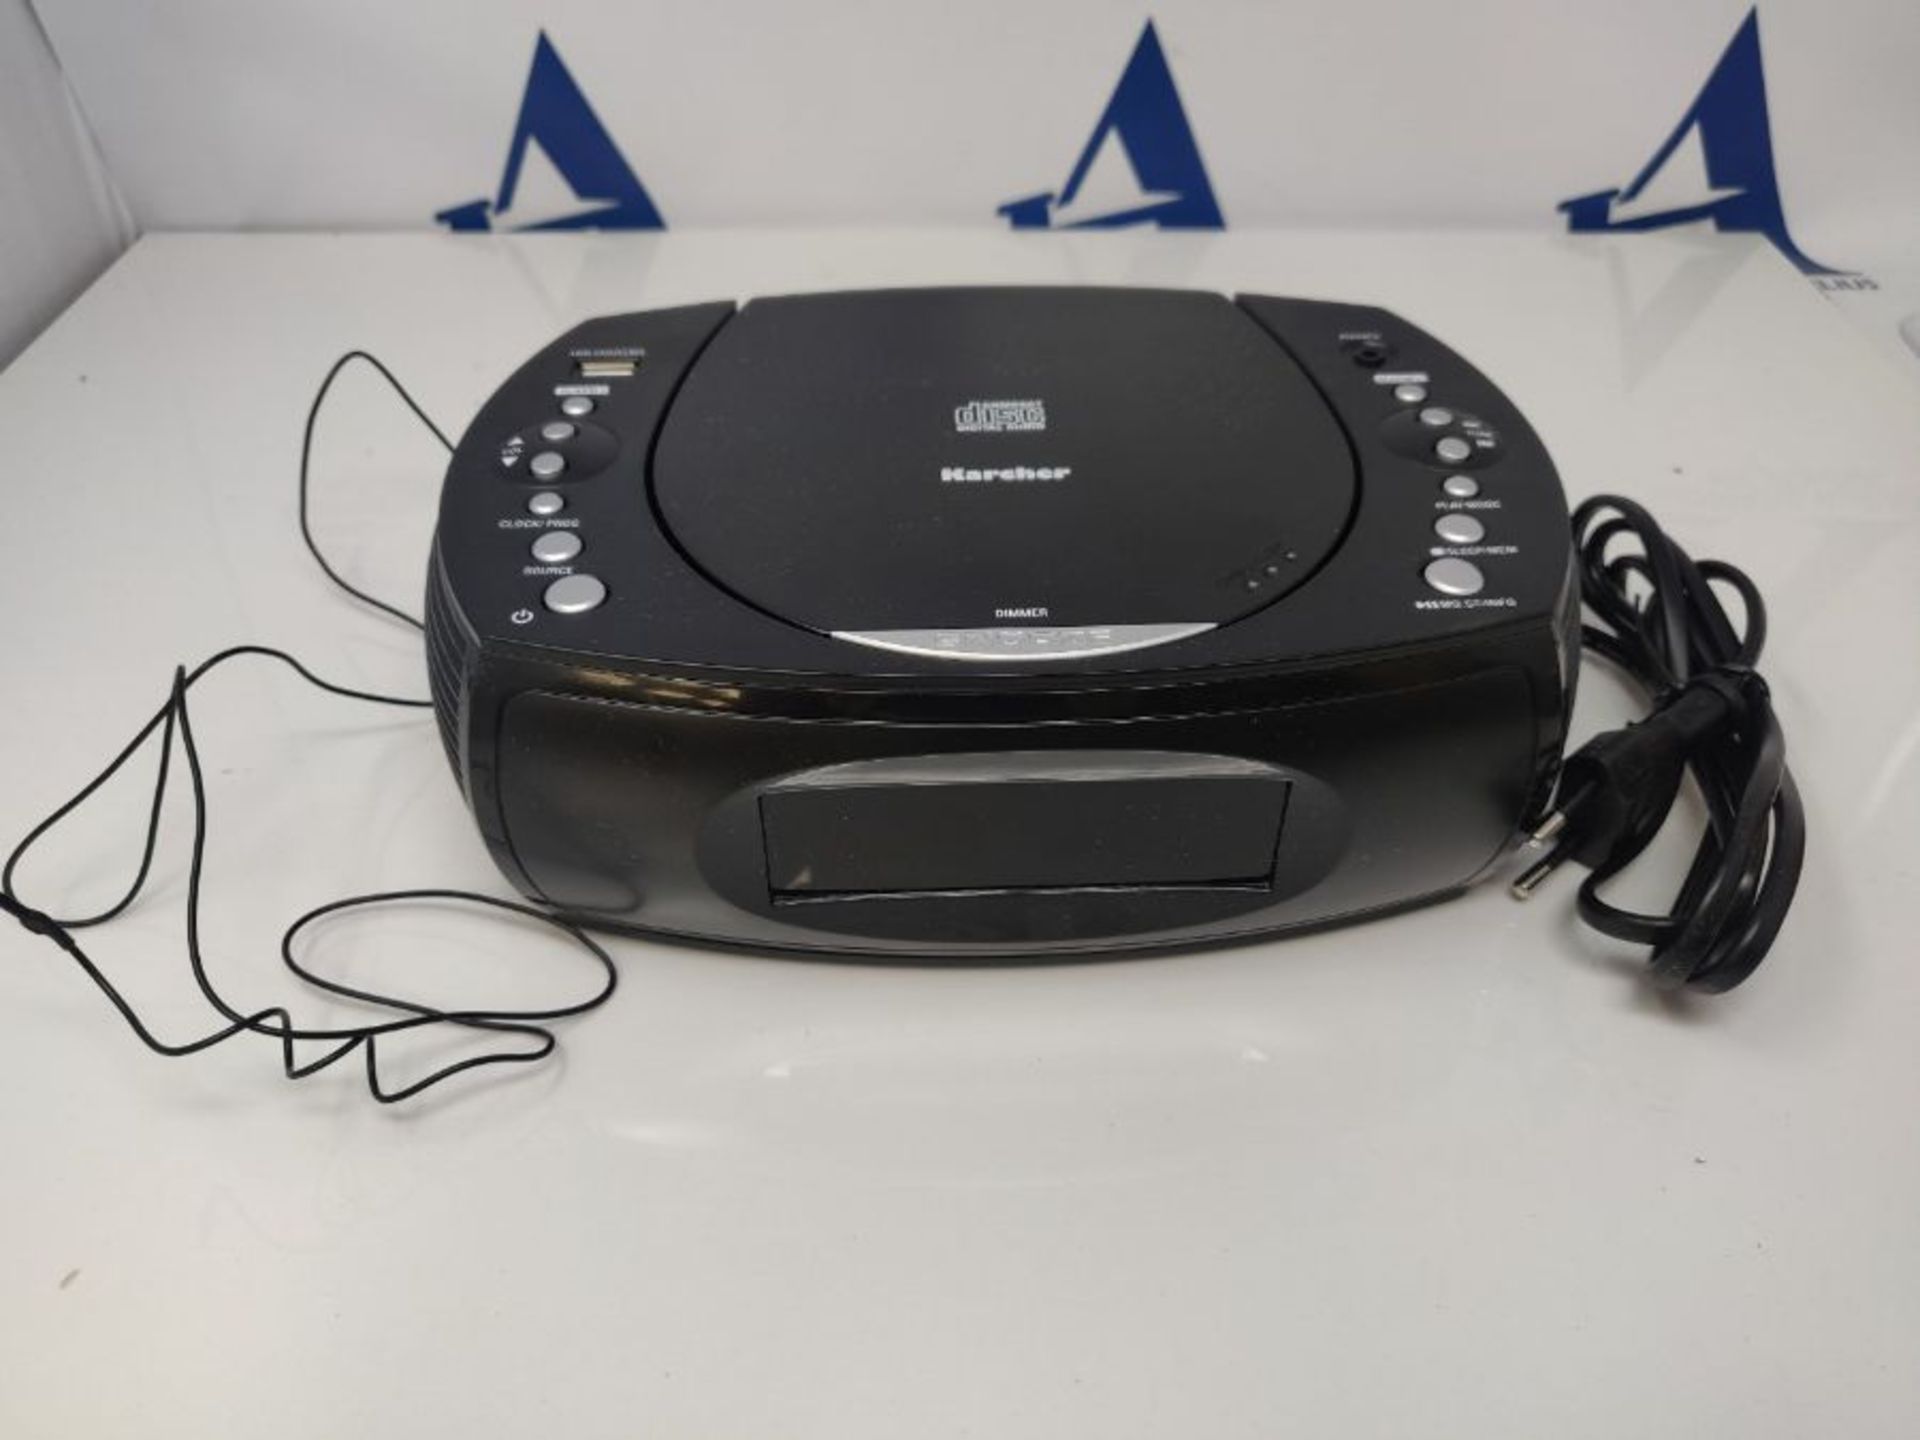 Kärcher (UR 1308) clock radio with CD player and FM radio (20 station memory) USB cha - Image 3 of 3